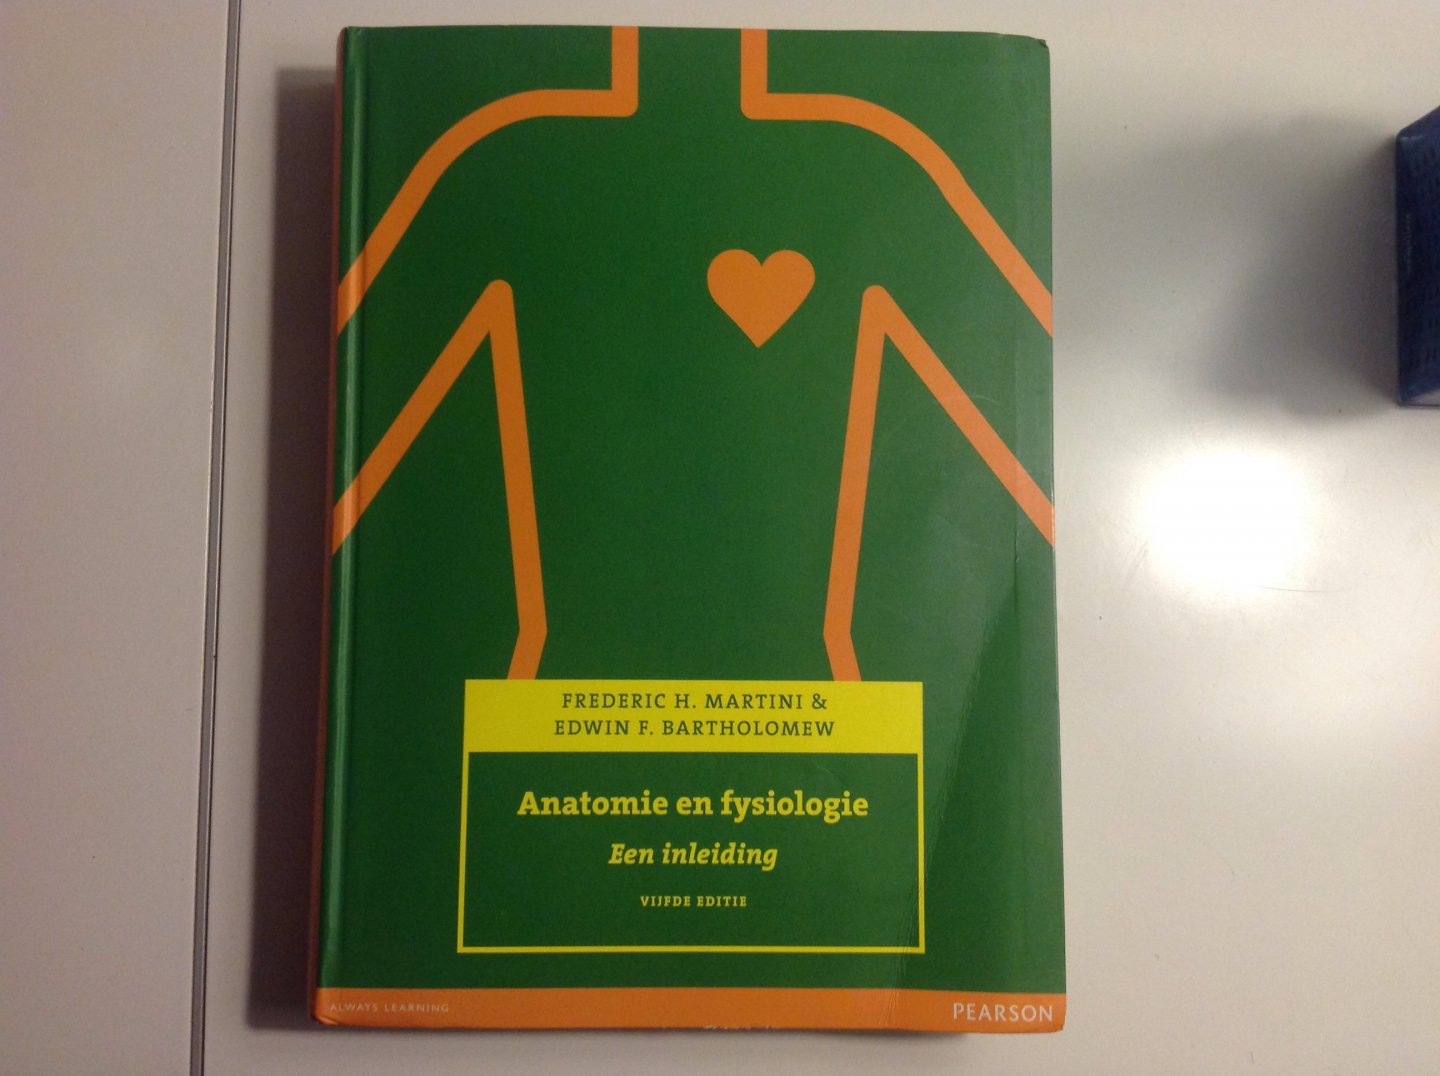 Martini, Frederic H., Bartholomew, Edwin F. - Anatomie en fysiologie, 5e editie met XTRA toegangscode / een inleiding